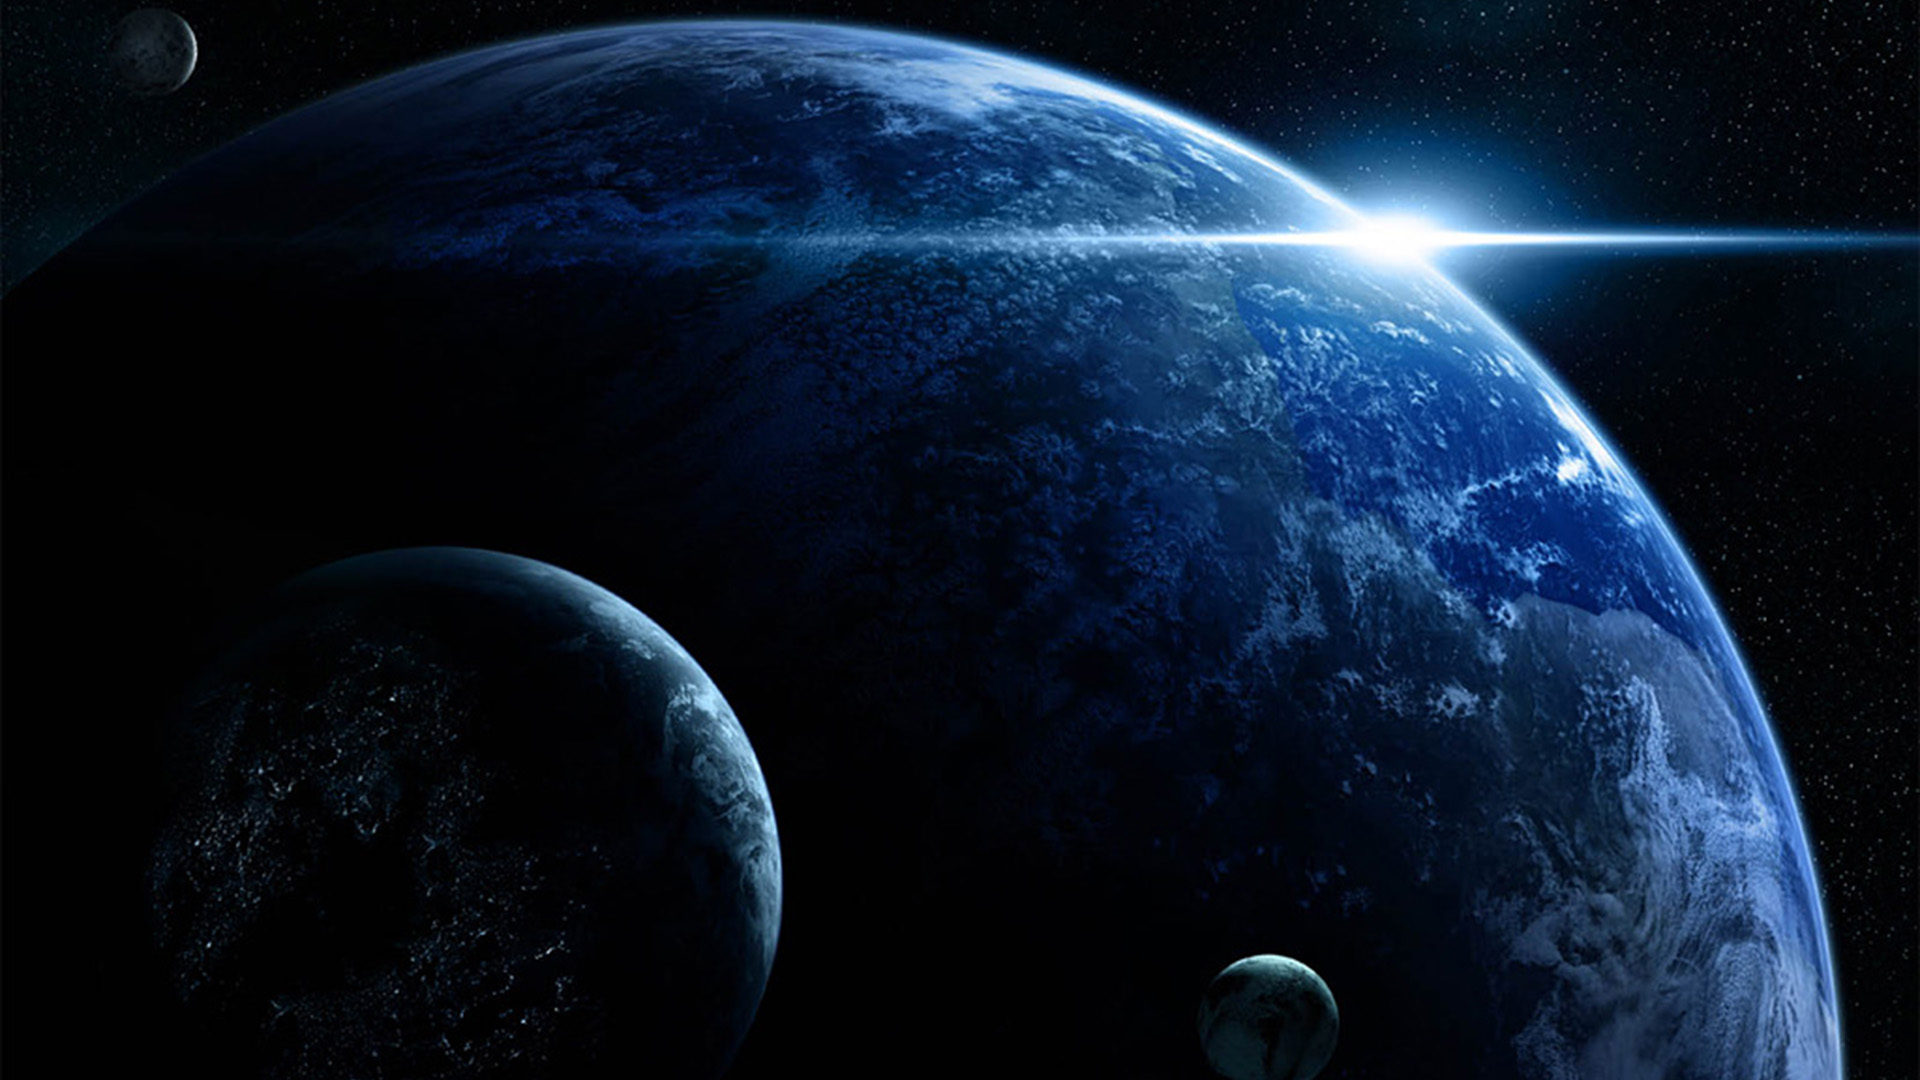 1920x1080p fondo de pantalla,espacio exterior,planeta,objeto astronómico,tierra,universo